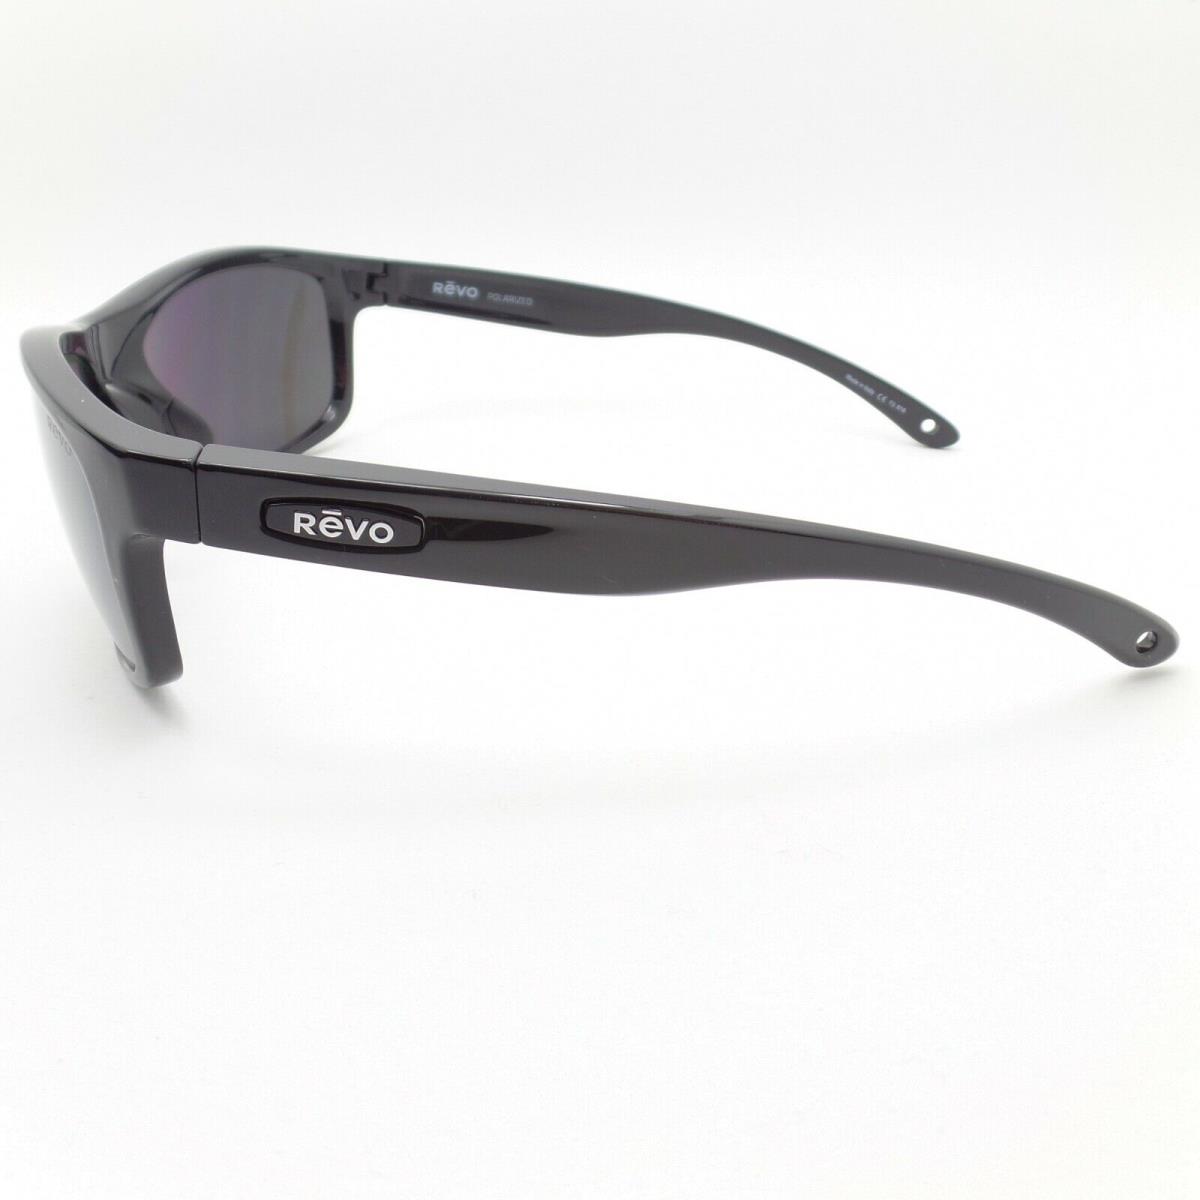 Revo sunglasses  - Shiny Black